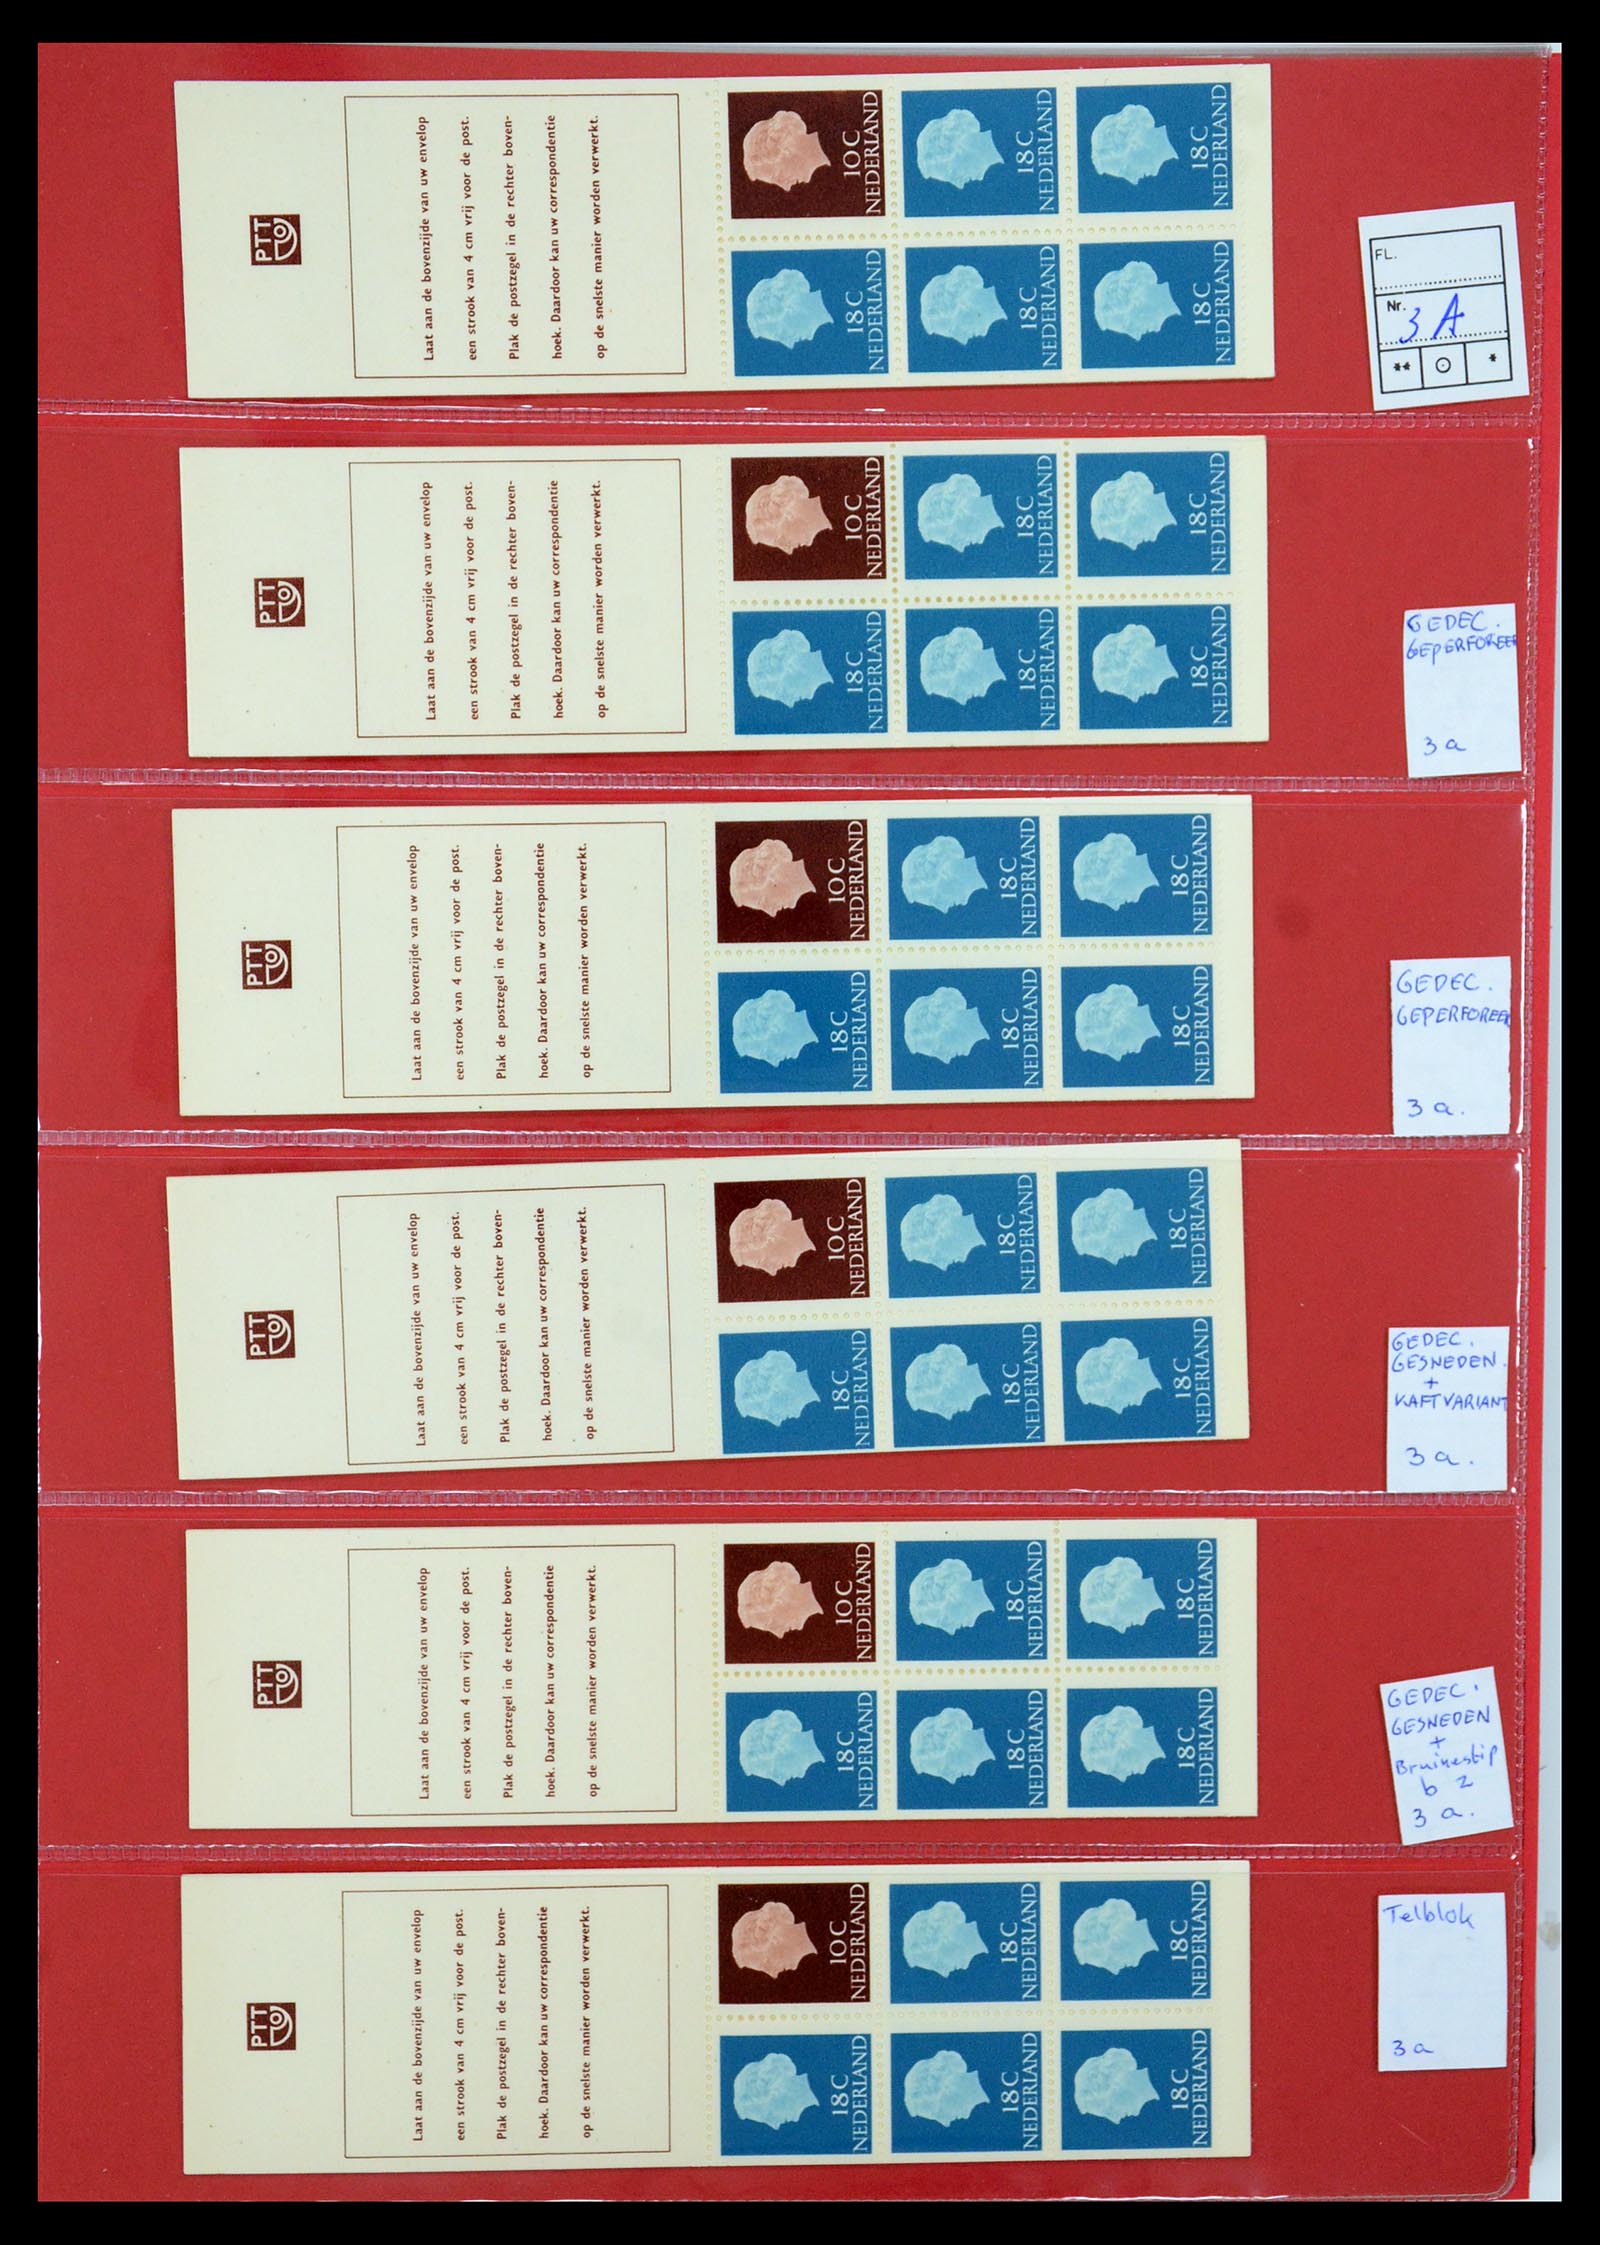 35705 024 - Stamp Collection 35705 Netherlands stamp booklets 1964-2000.